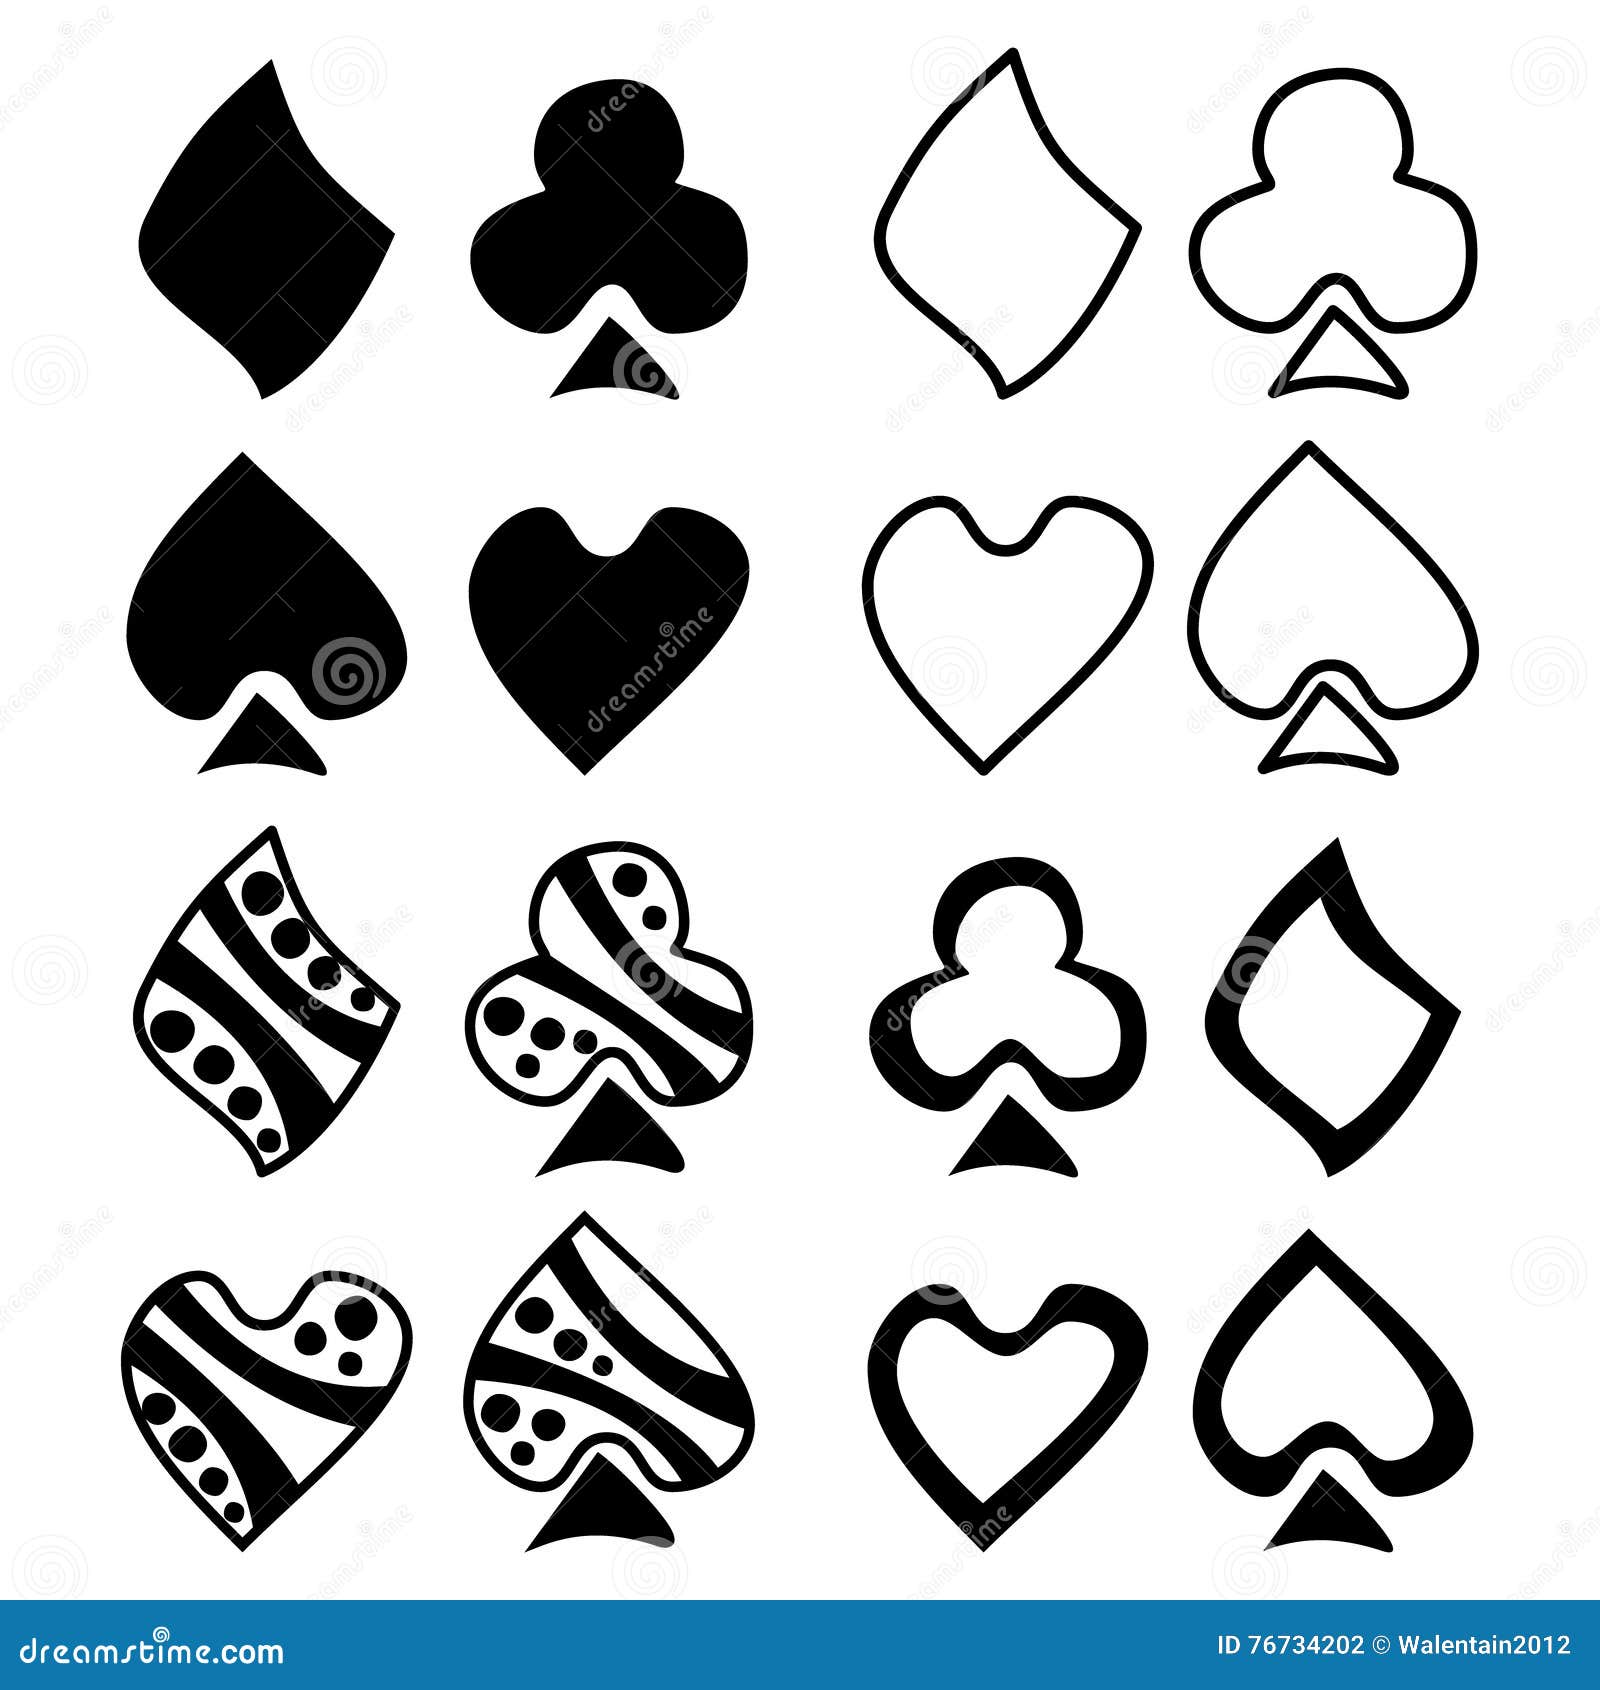 Playing Card Symbols SVG